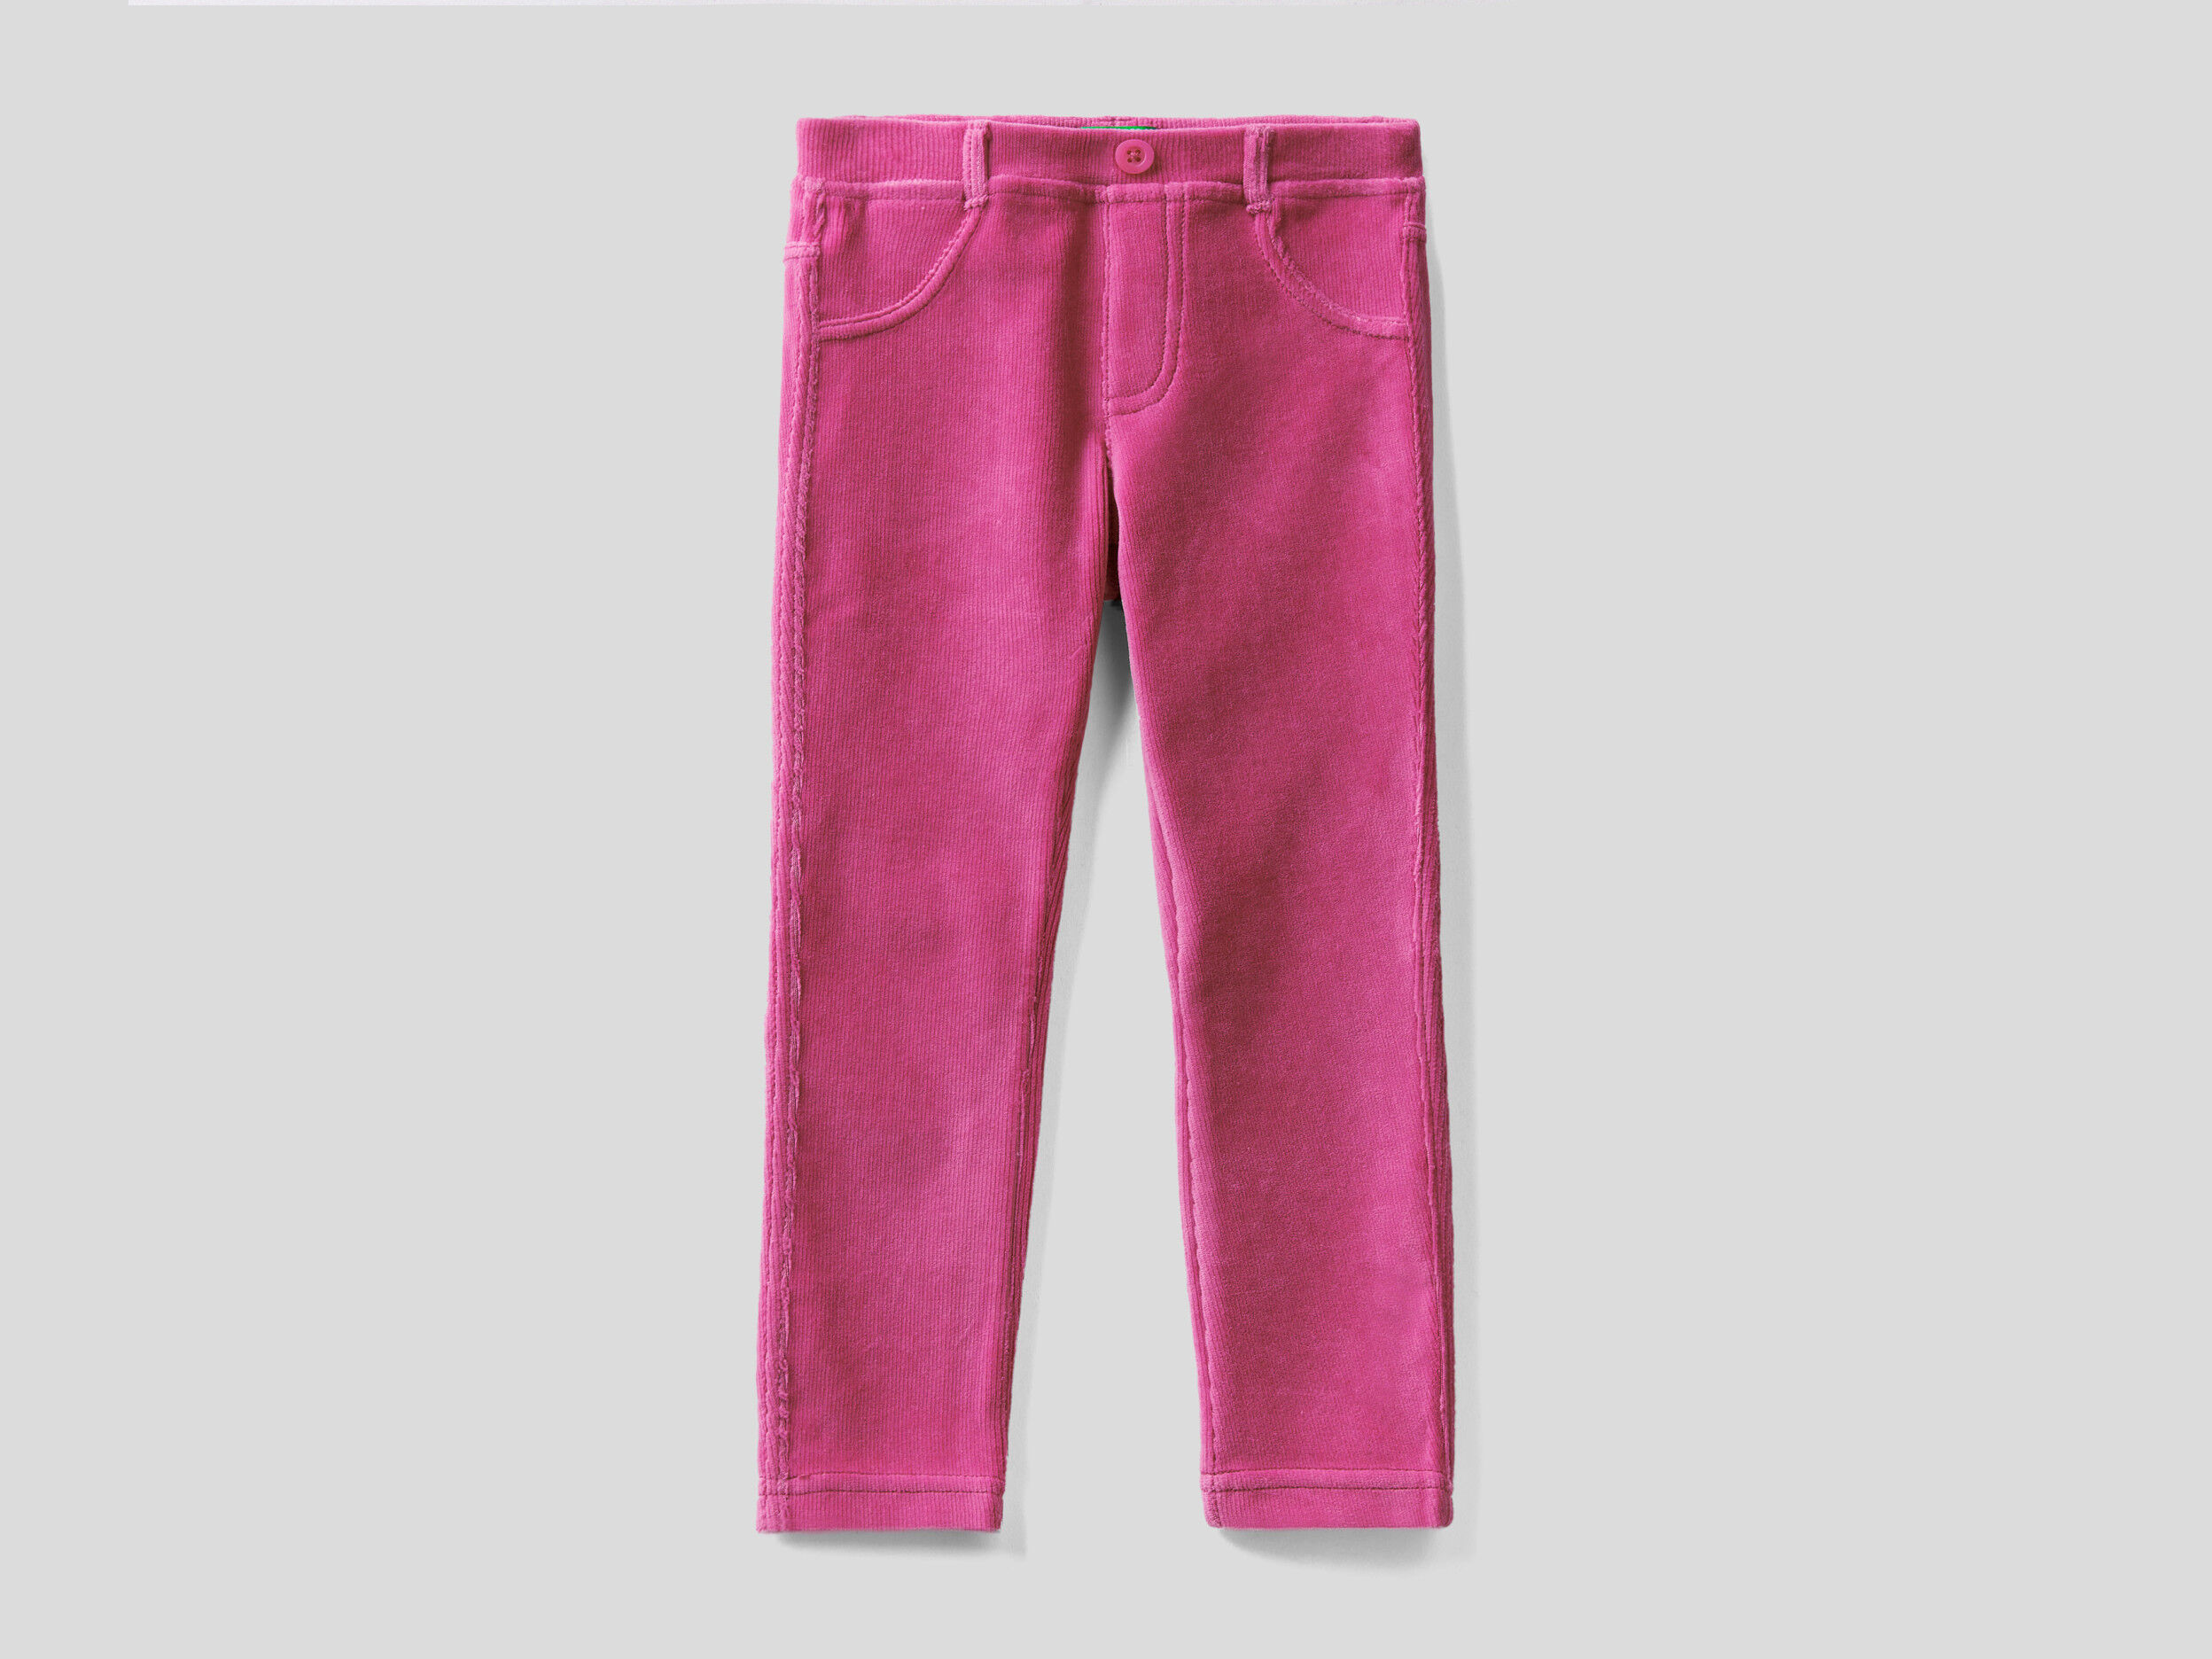 Pantaloni In Ciniglia Stretch United Colors of Benetton Abbigliamento Pantaloni e jeans Pantaloni Pantaloni stretch 